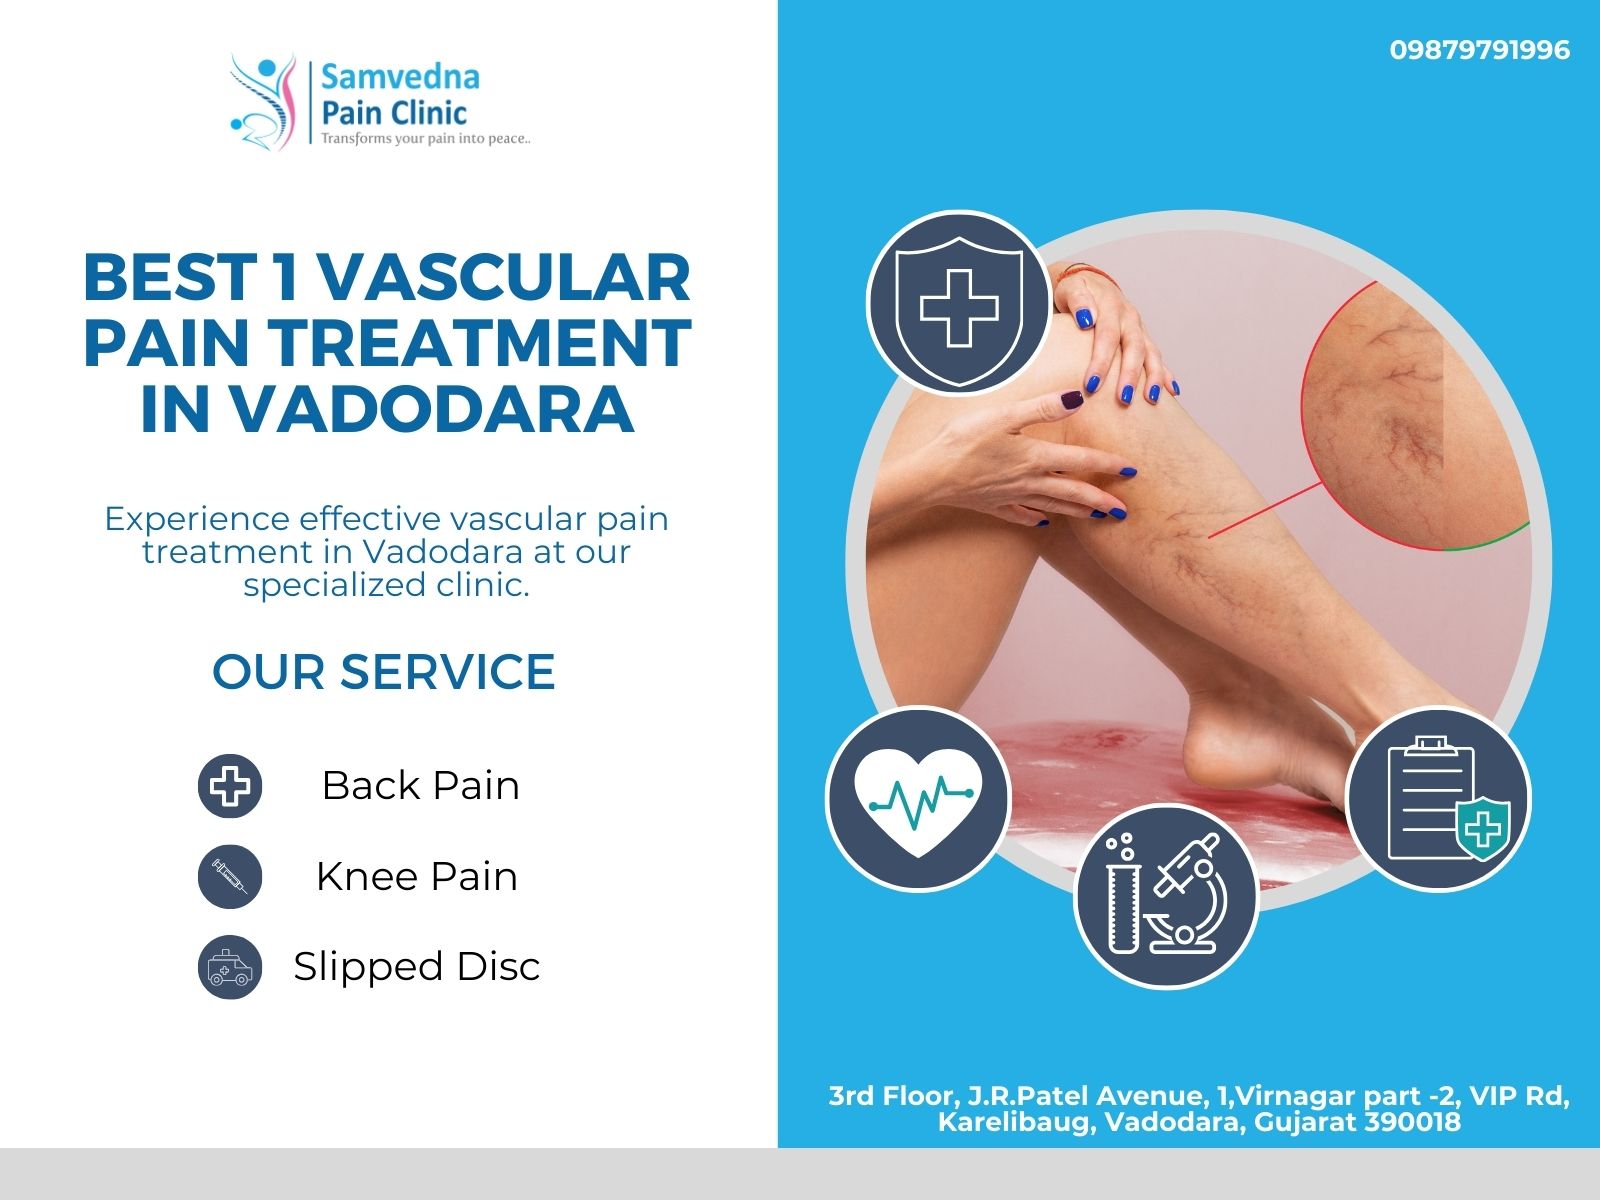 Best 1 Vascular Pain Treatment In Vadodara